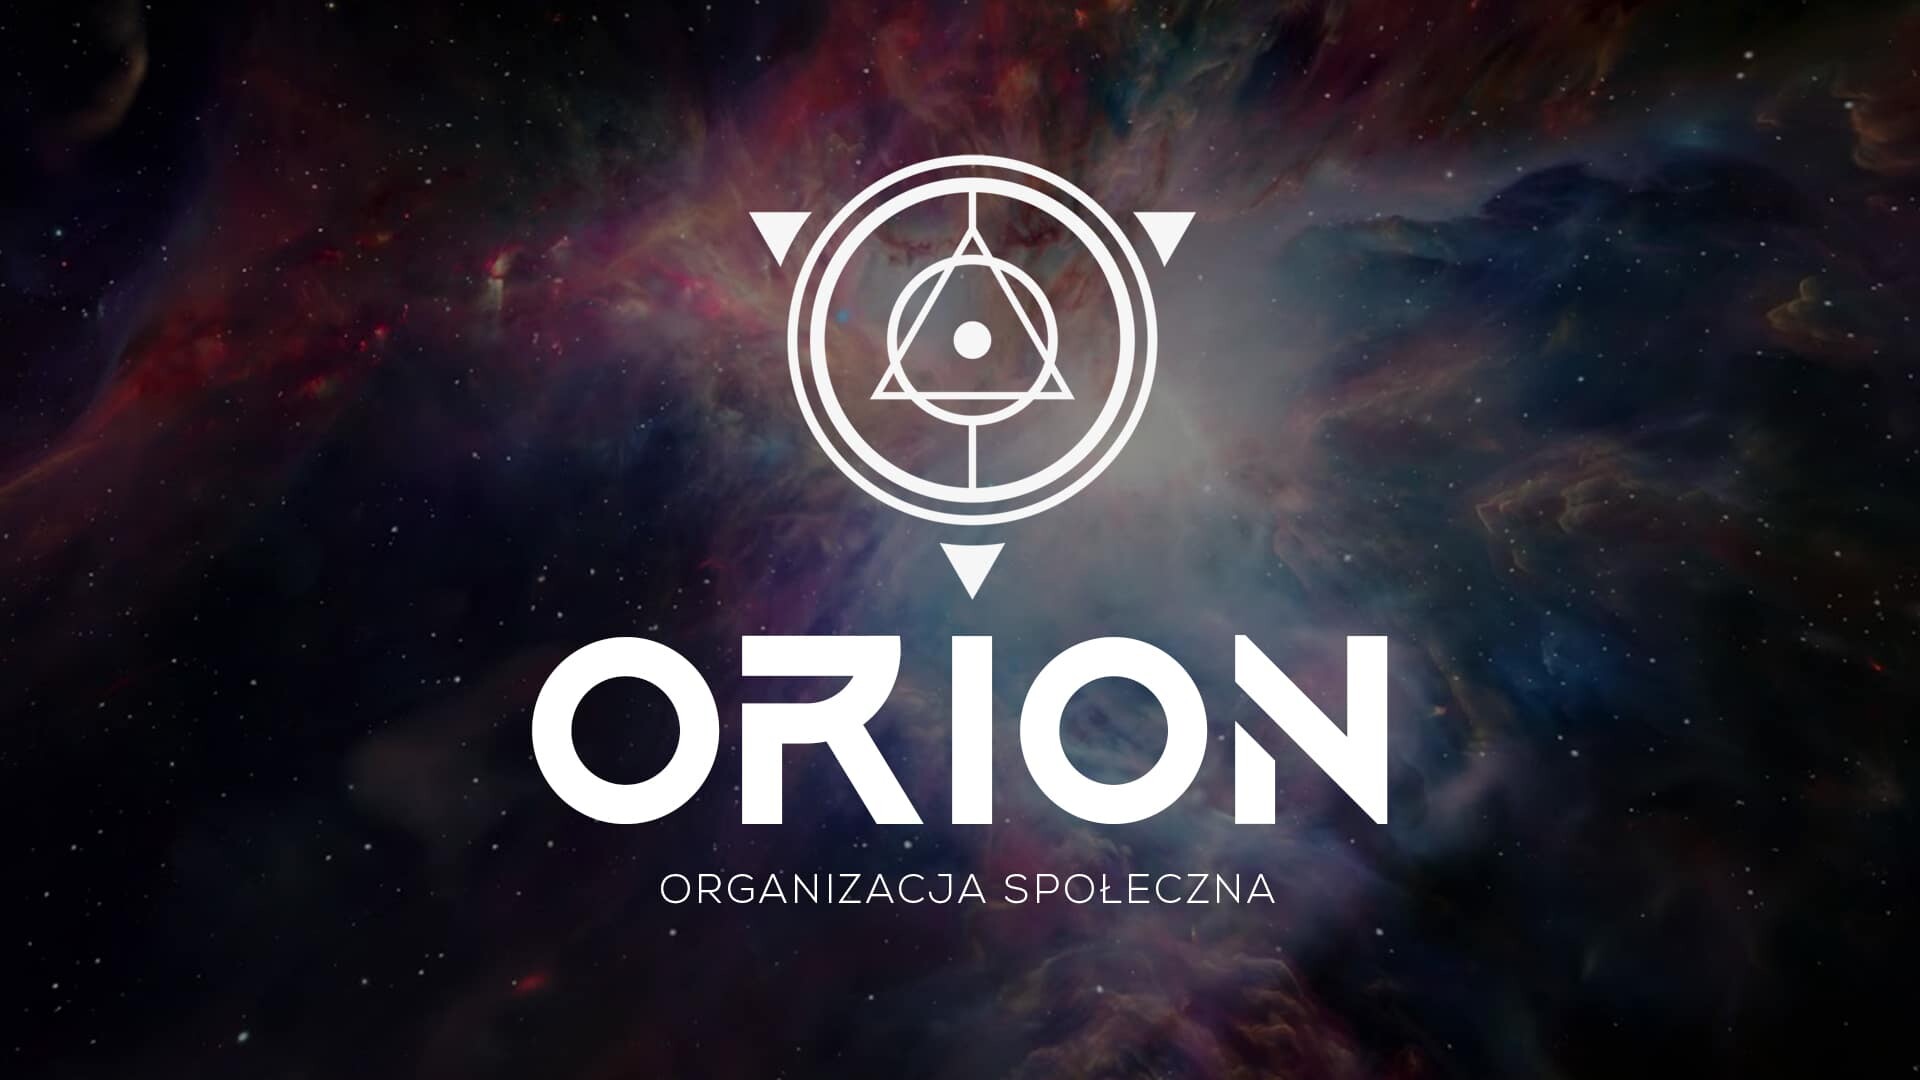 orion logo 1920x1080 google